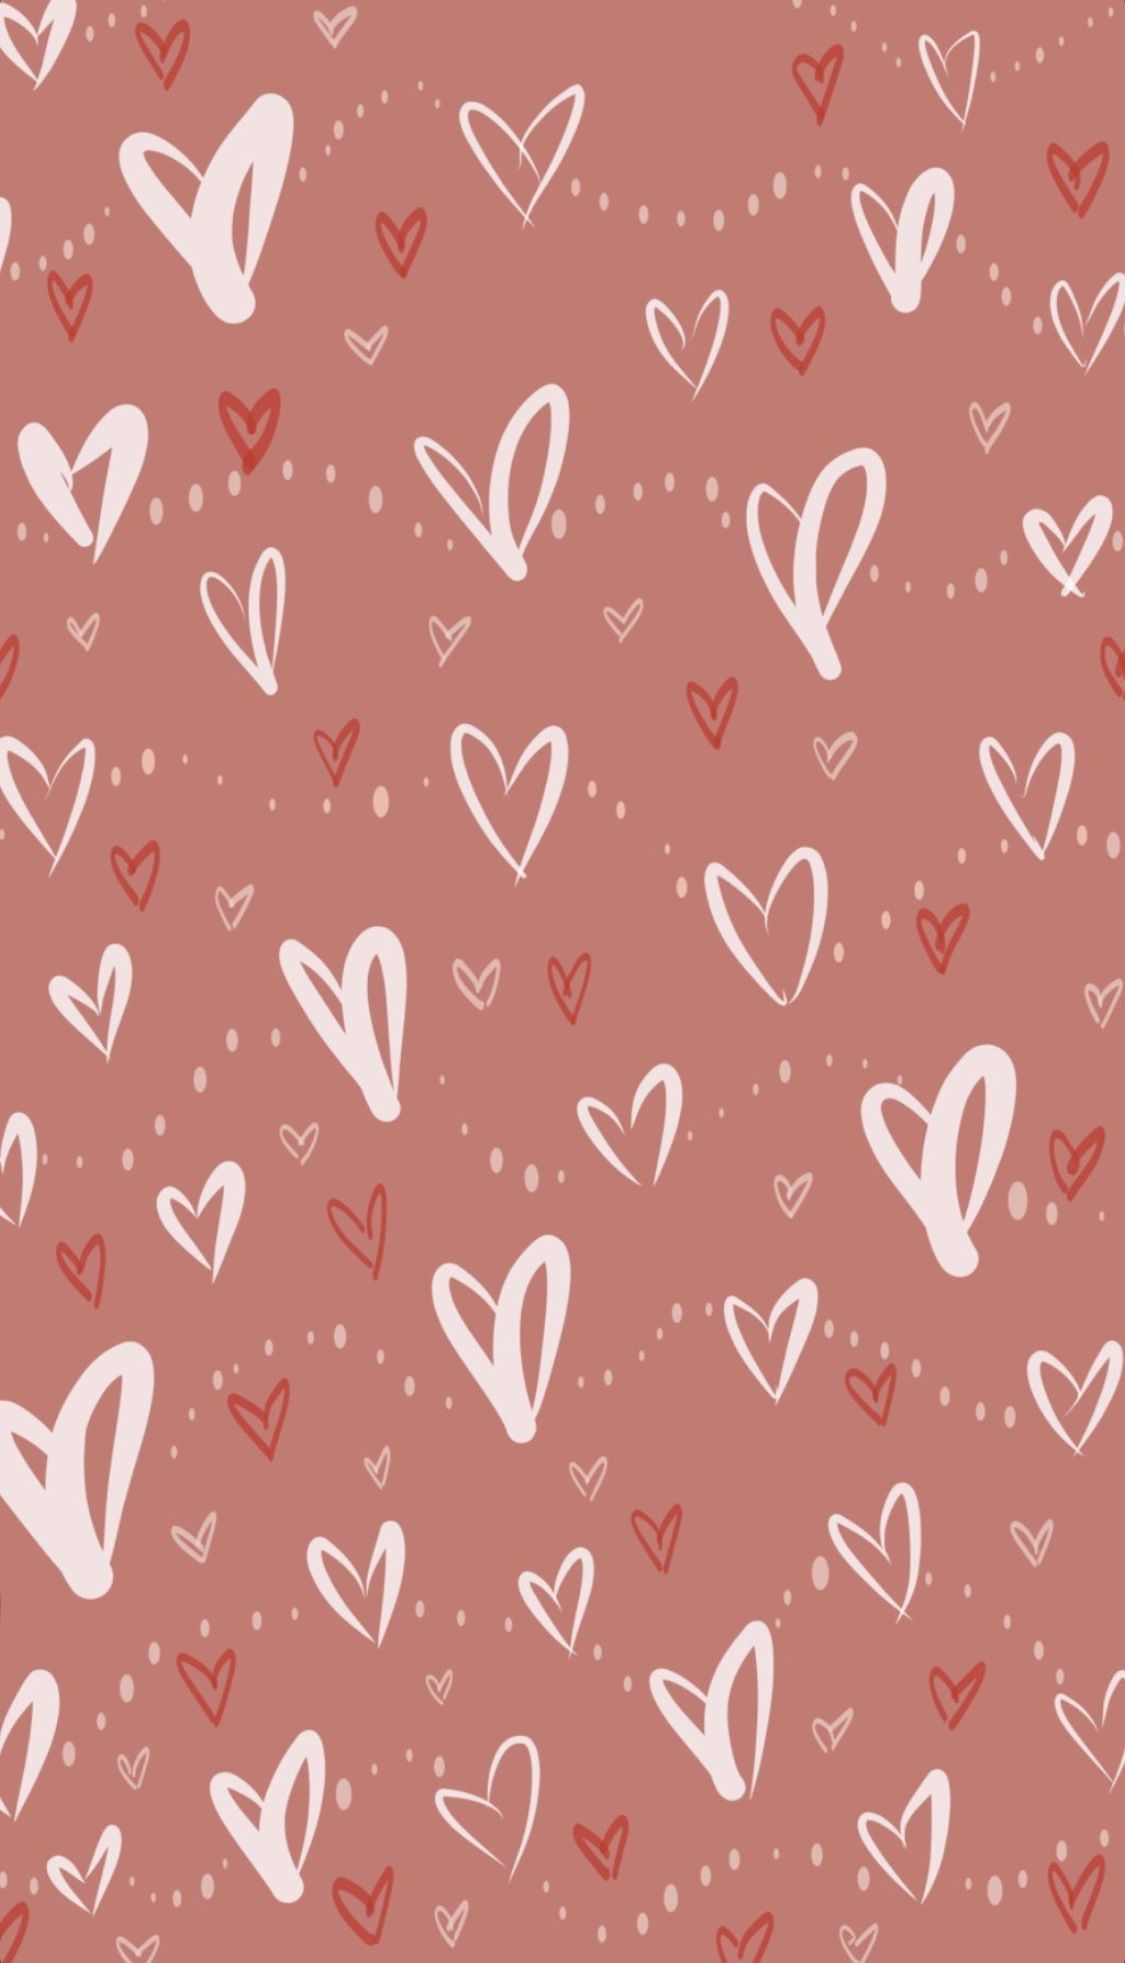 valentine's day wallpaper for phone. Valentines wallpaper iphone, Holiday iphone wallpaper, Cute fall wallpaper